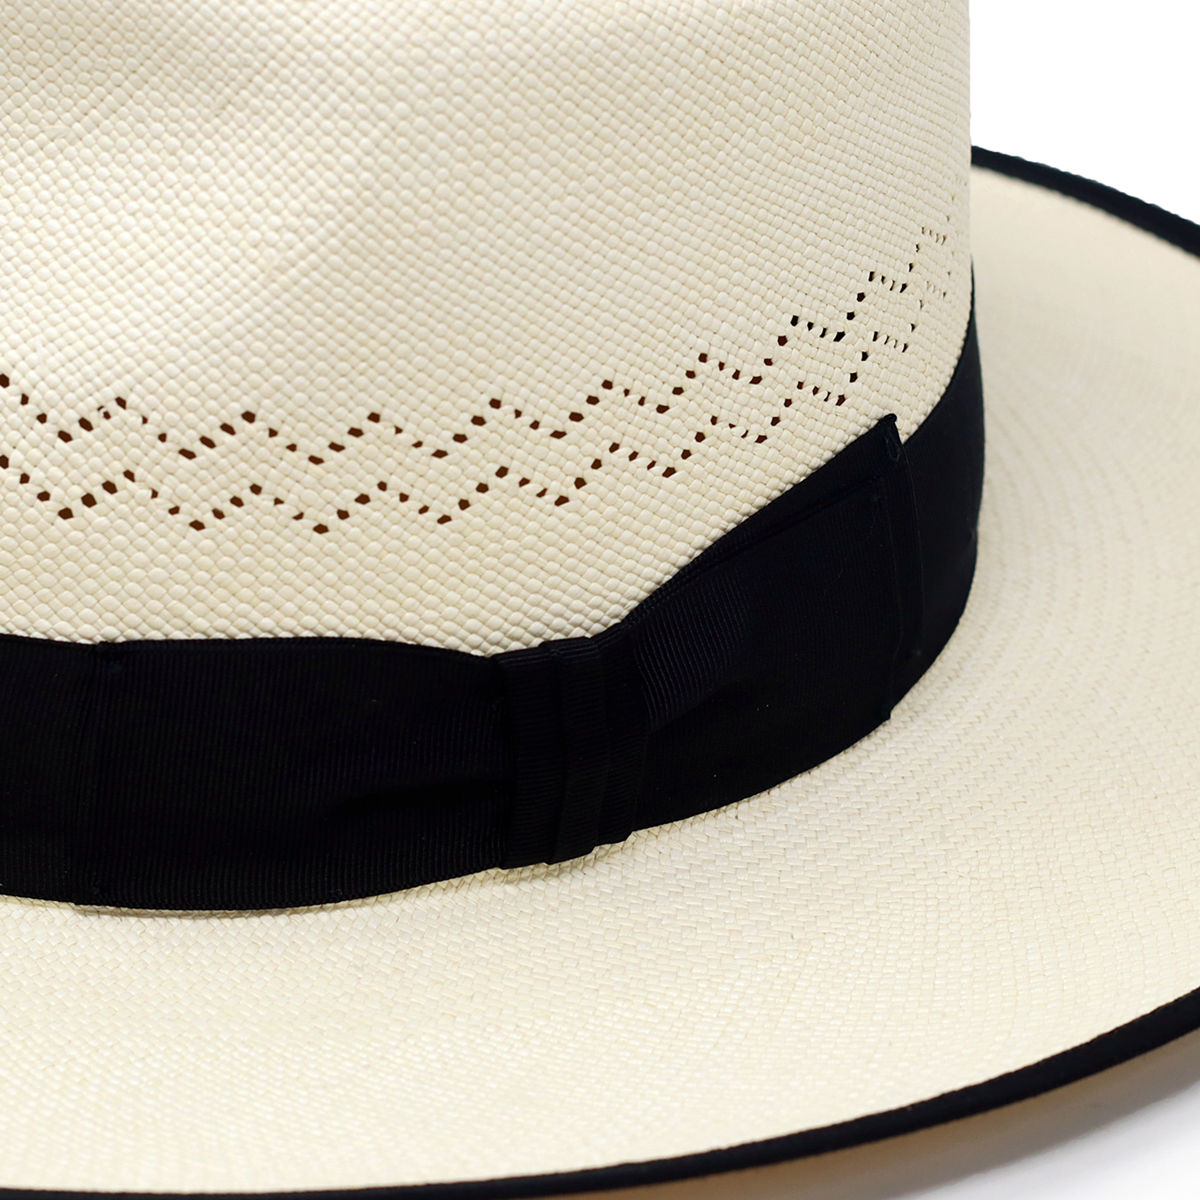 STETSON パナマハット グレード8 レース 透かし編み パイピング 帽子 ハット 中折れハット 高級 パナマ ステットソン エクアドル製  中折れ帽 春夏 メンズ